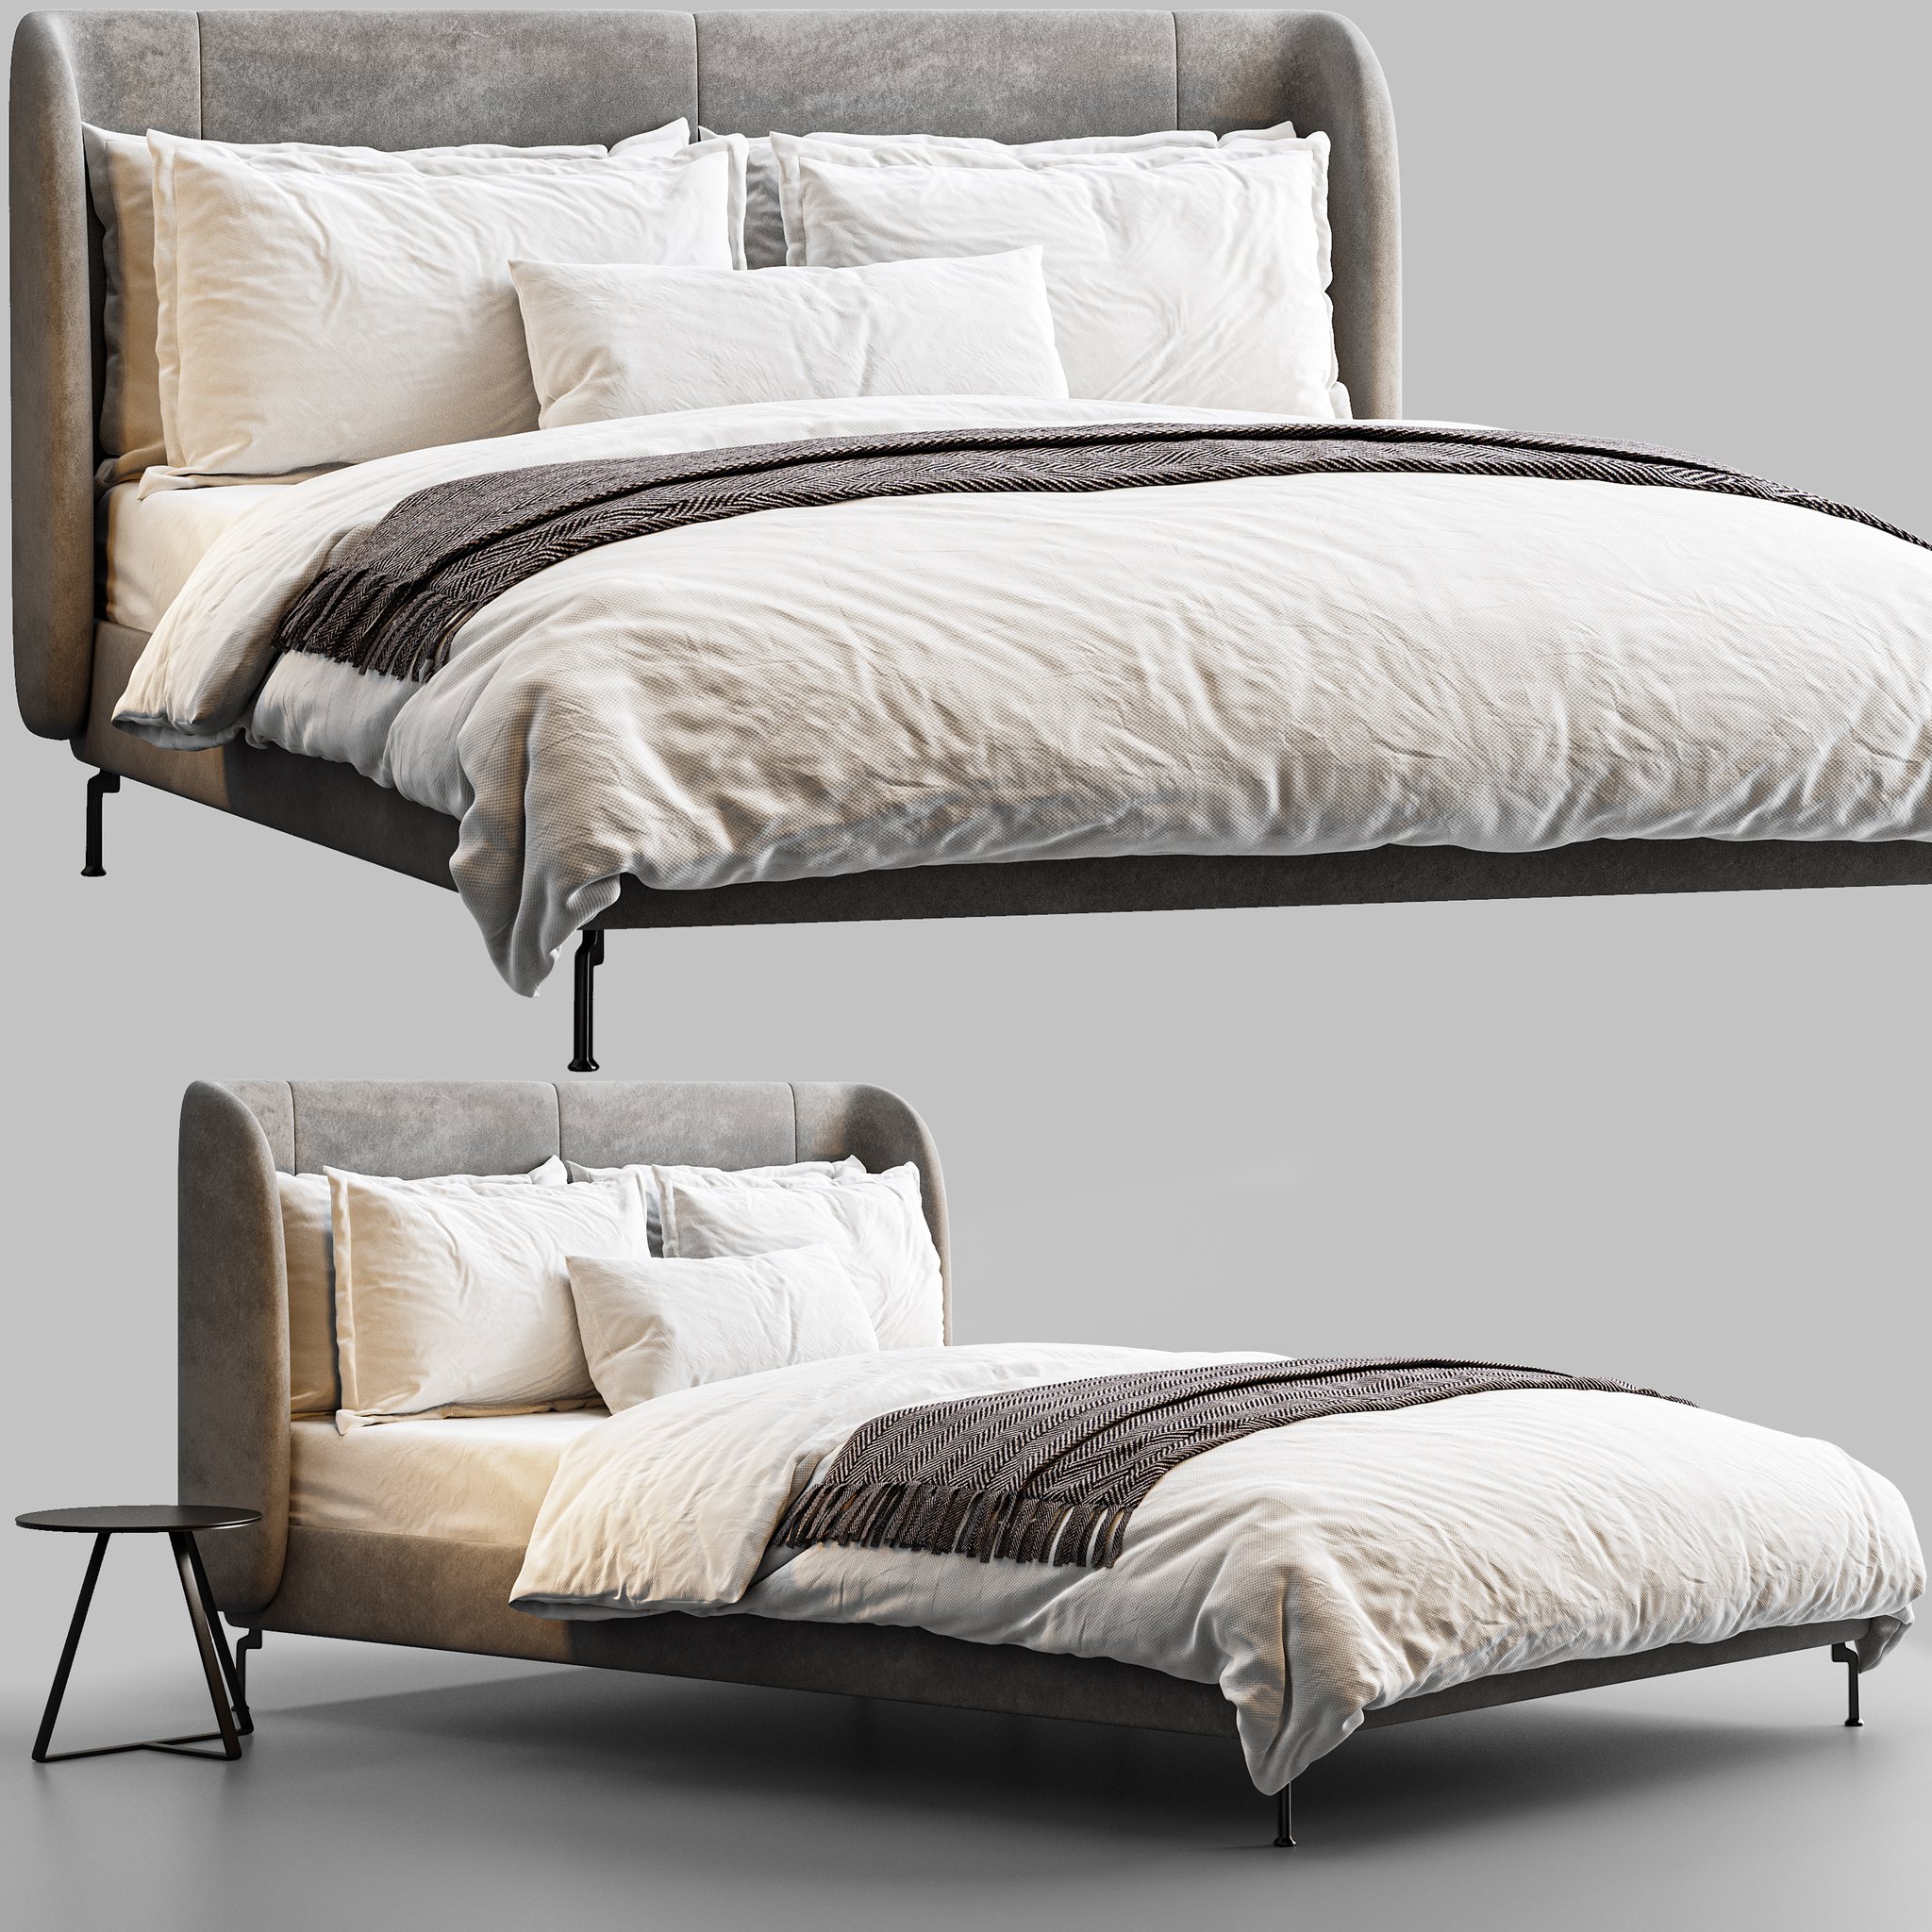 Opschudding spiraal Optimisme IKEA TUFJORD bed Ikea Tufjord | FREE 3D Bed models | BlenderKit